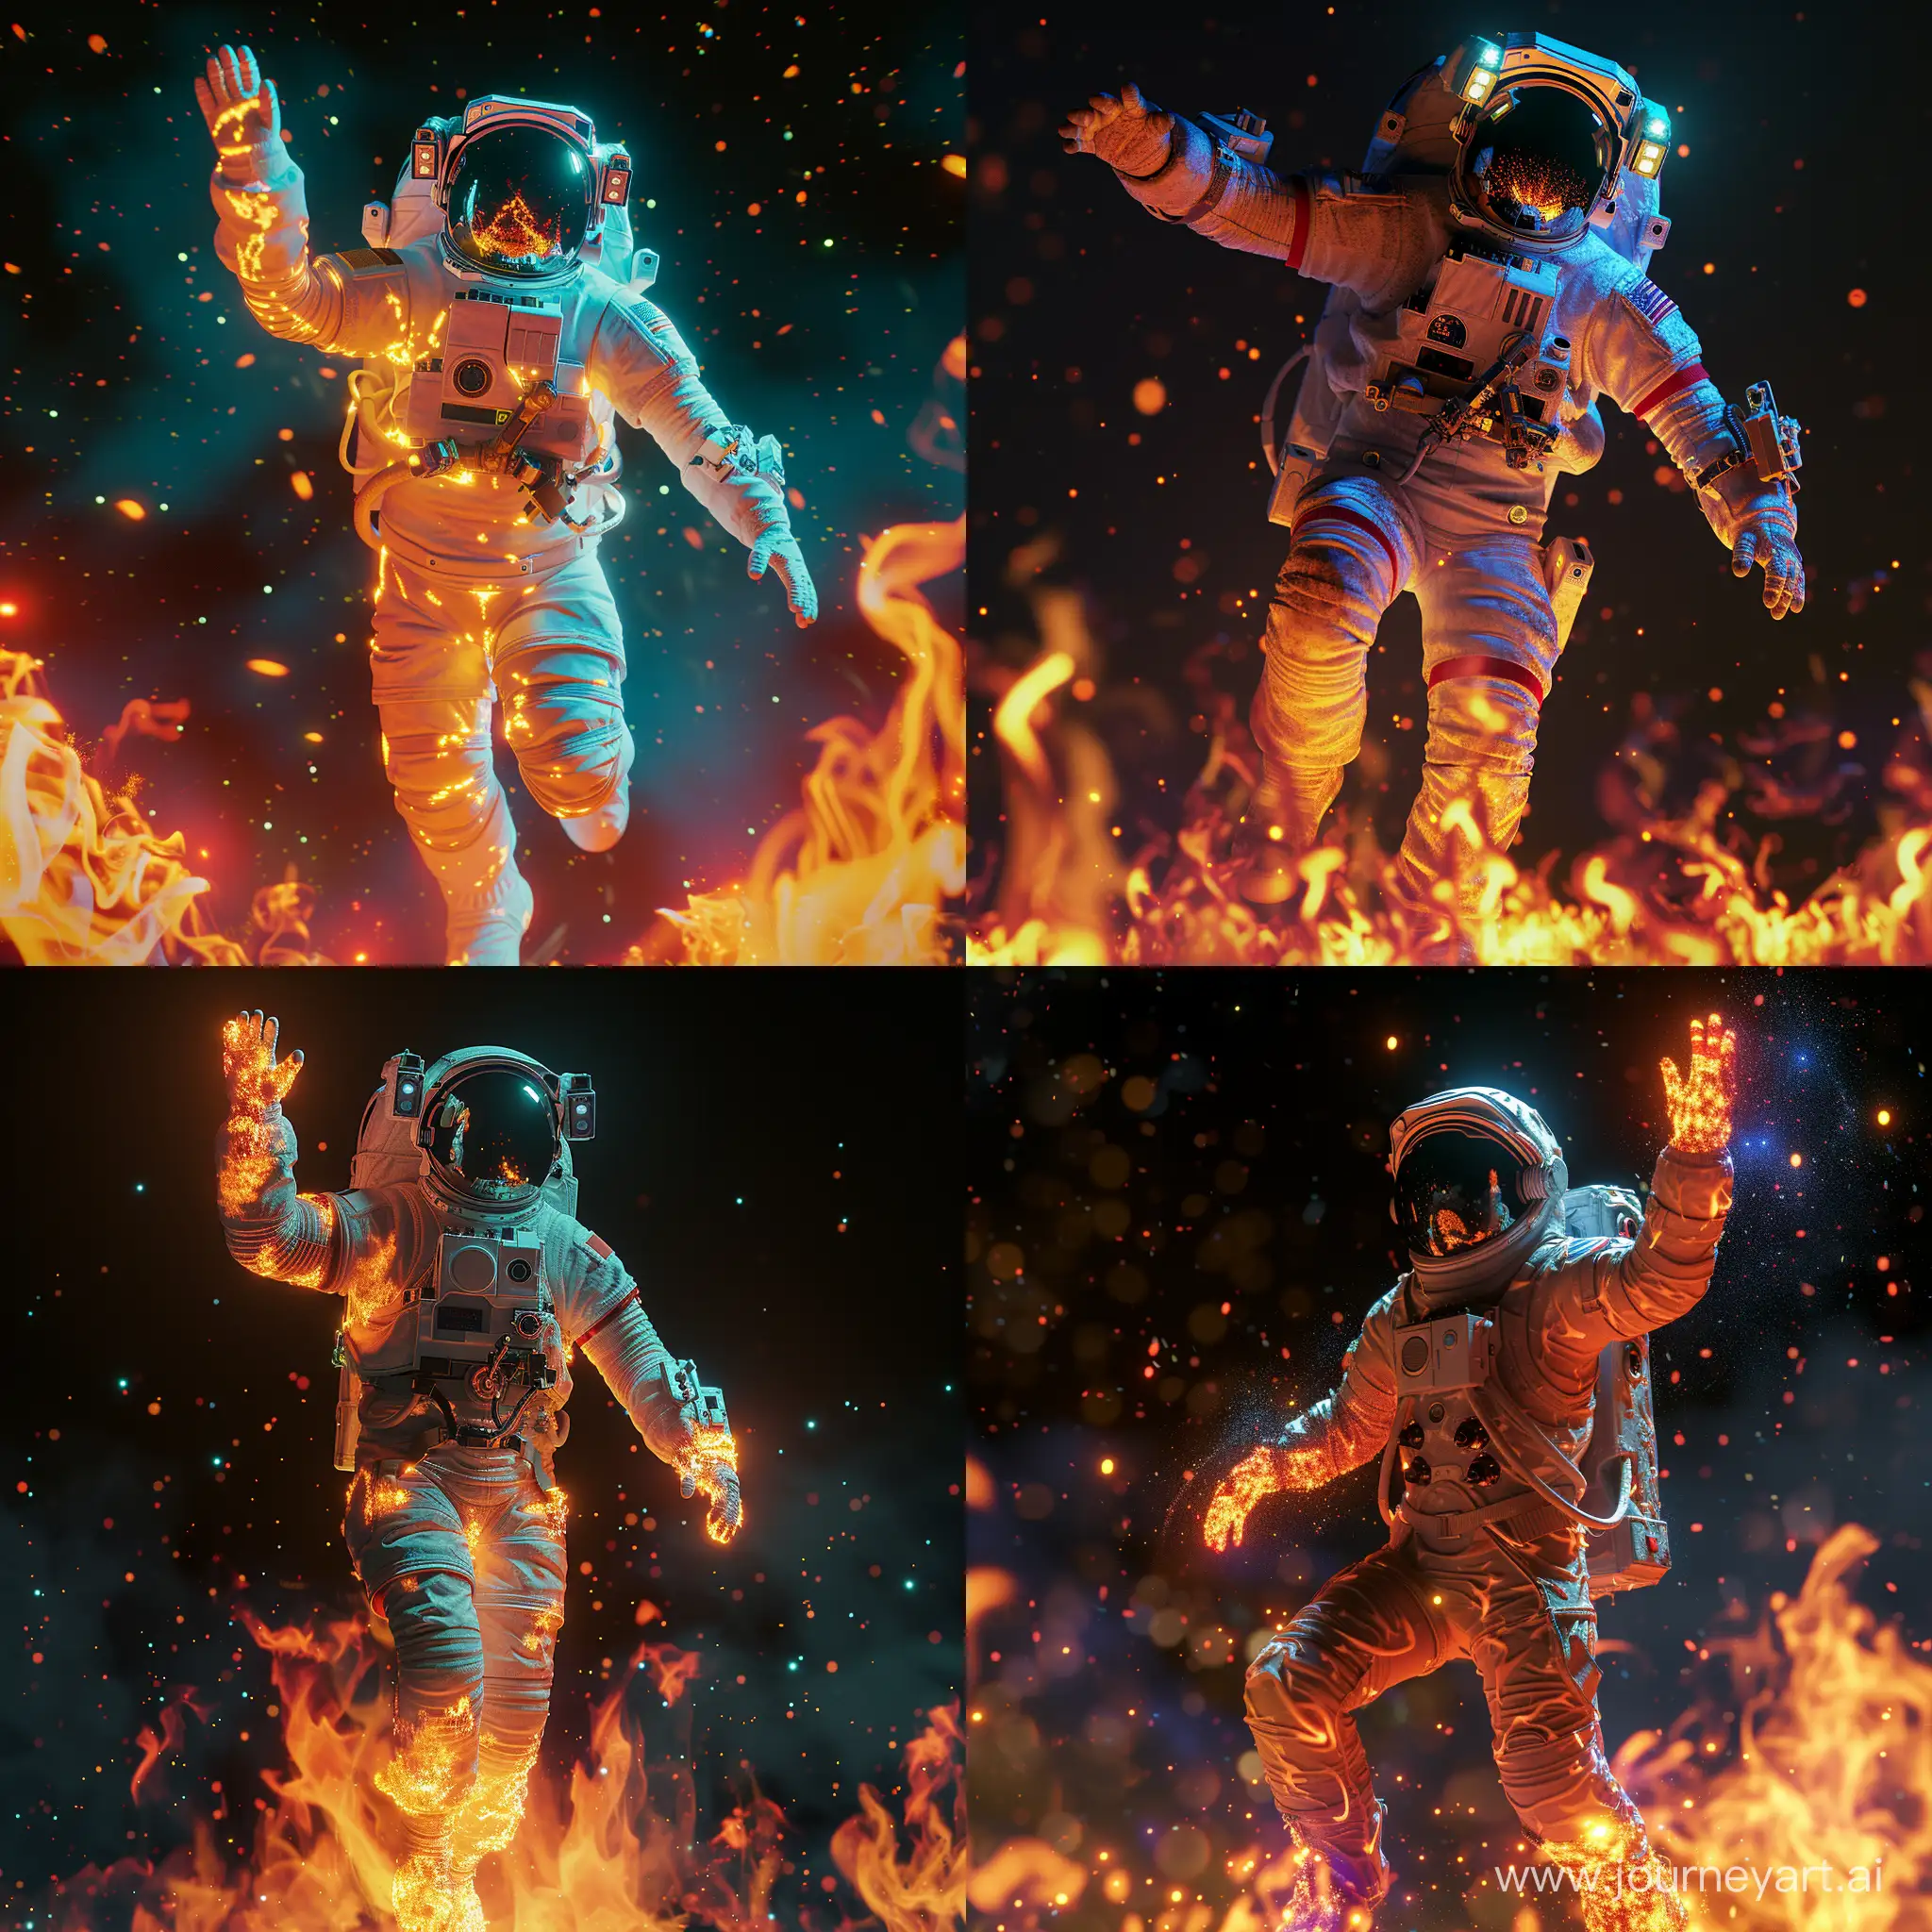 Intense-Astronaut-Walking-Through-Fire-in-Space